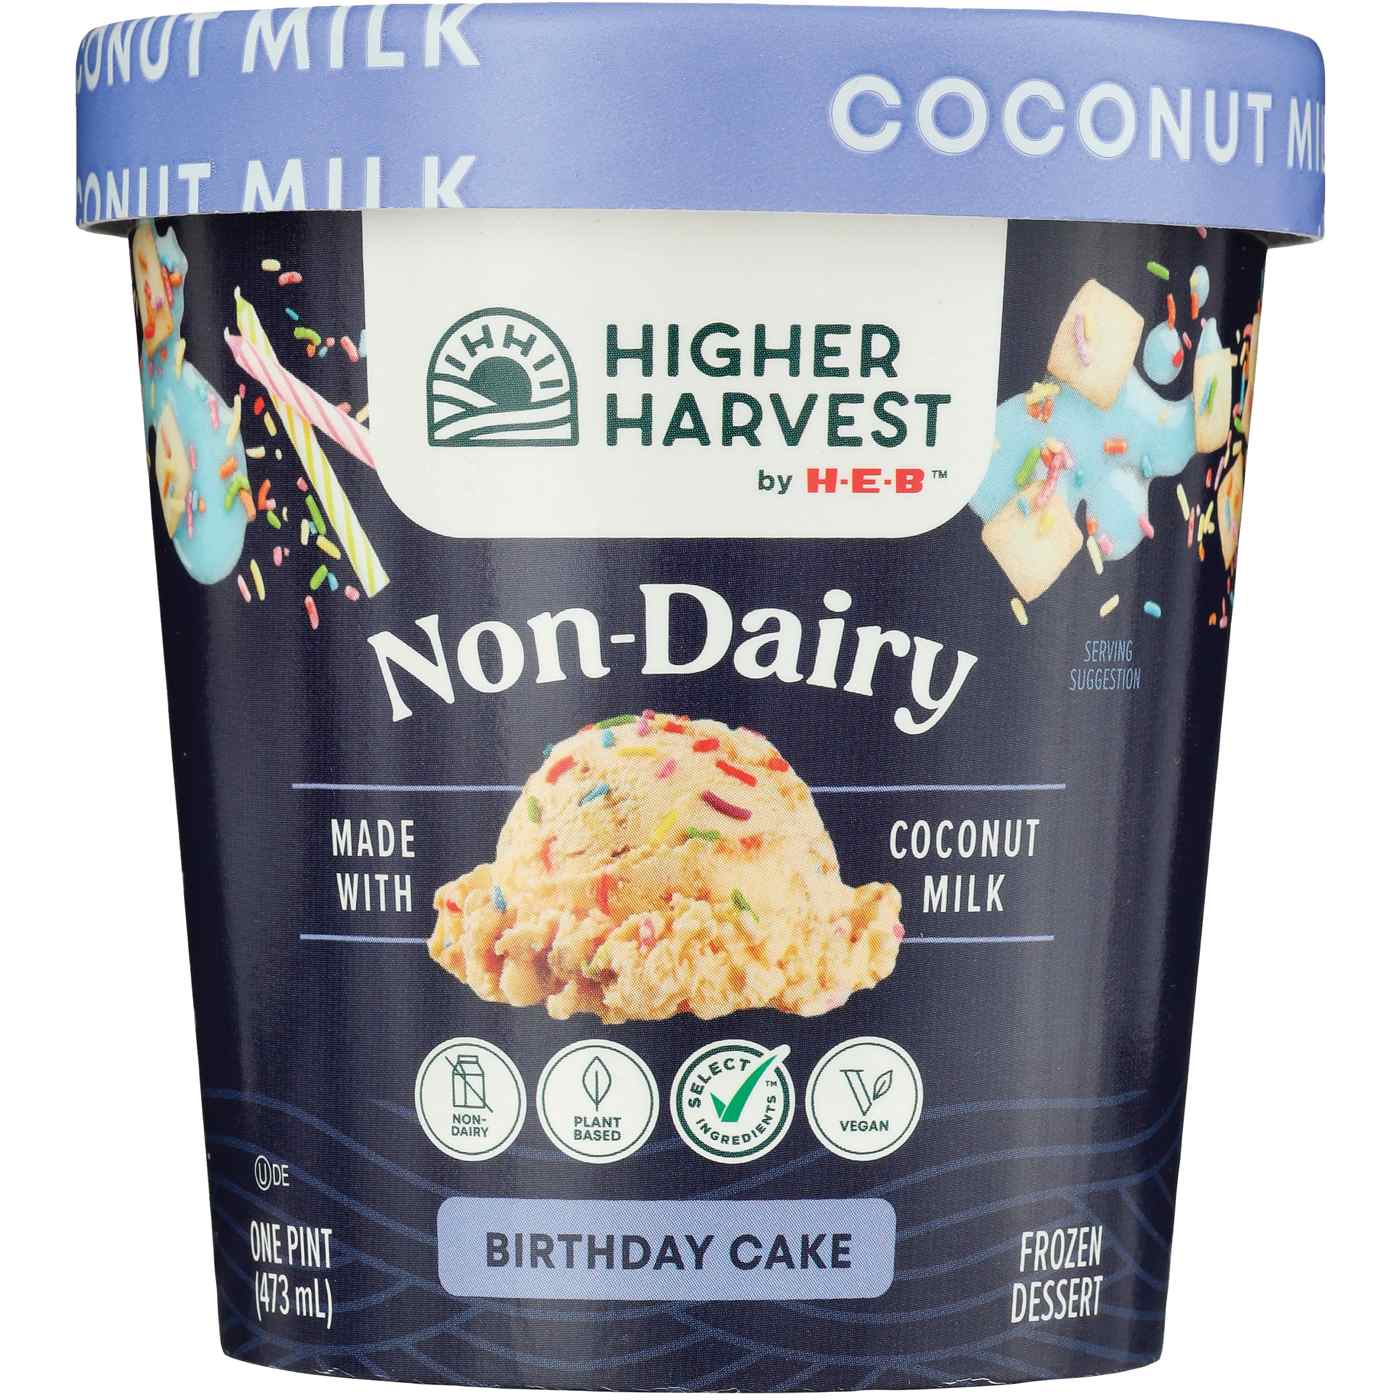 Higher Harvest by H-E-B Non-Dairy Frozen Dessert - Birthday Cake; image 2 of 2